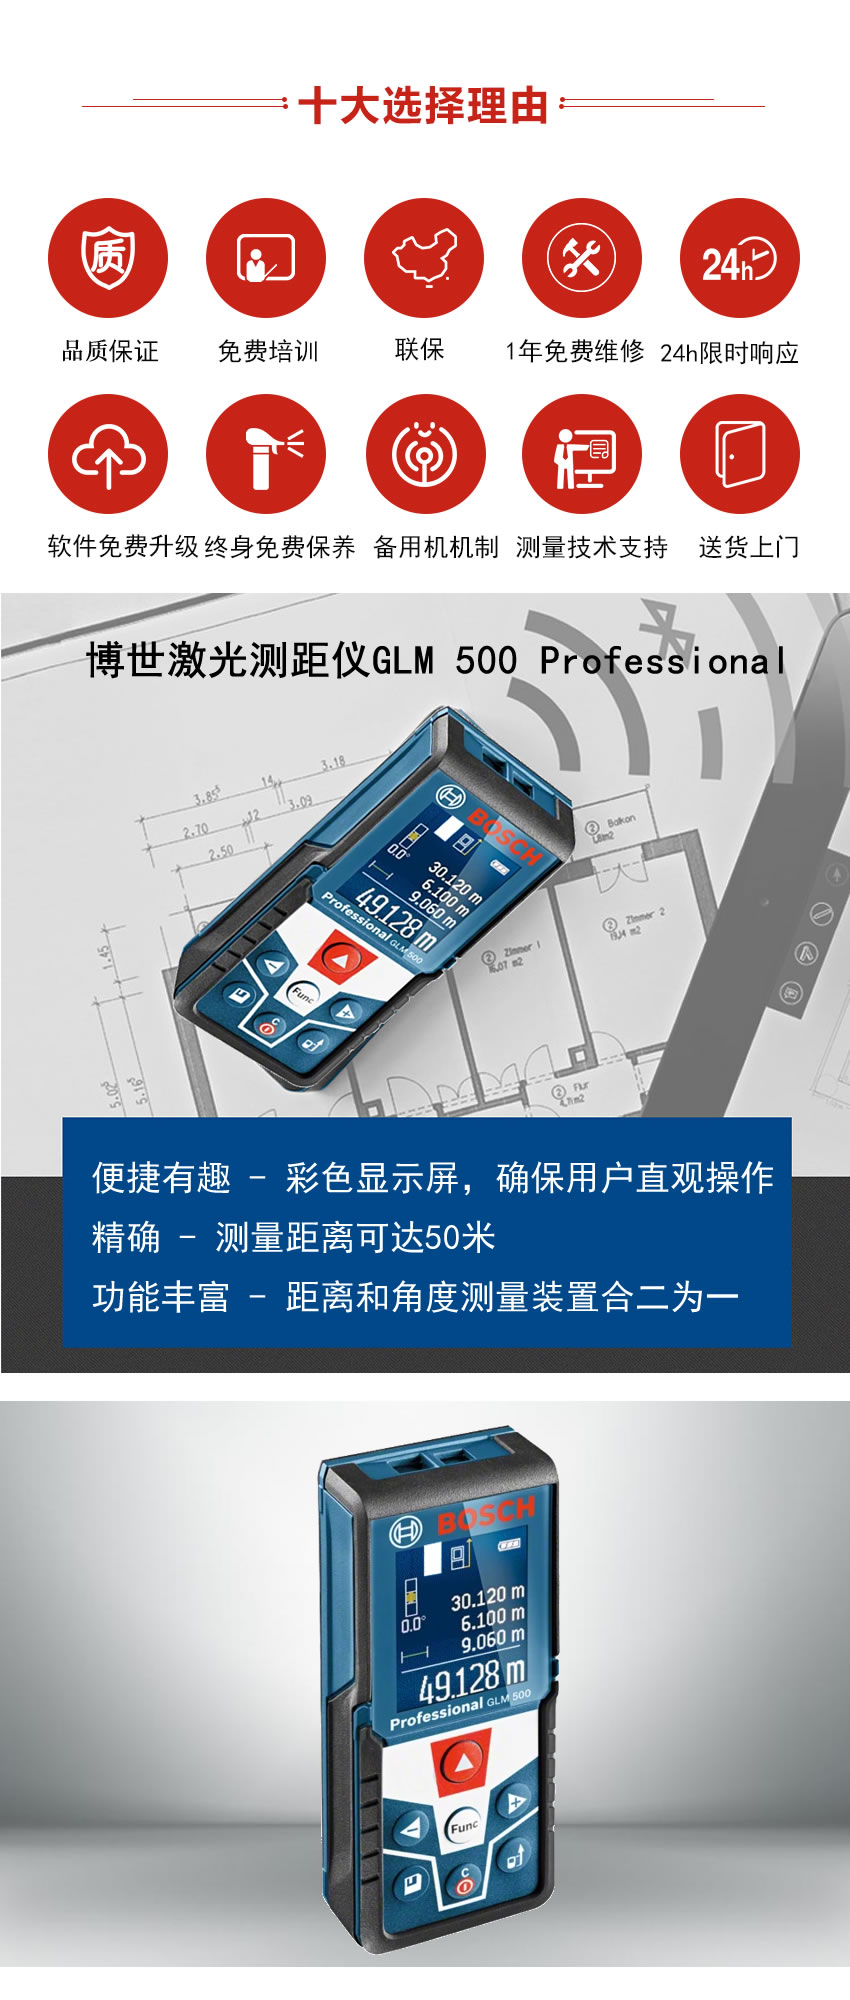 博世激光测距仪GLM 500 Professional.jpg